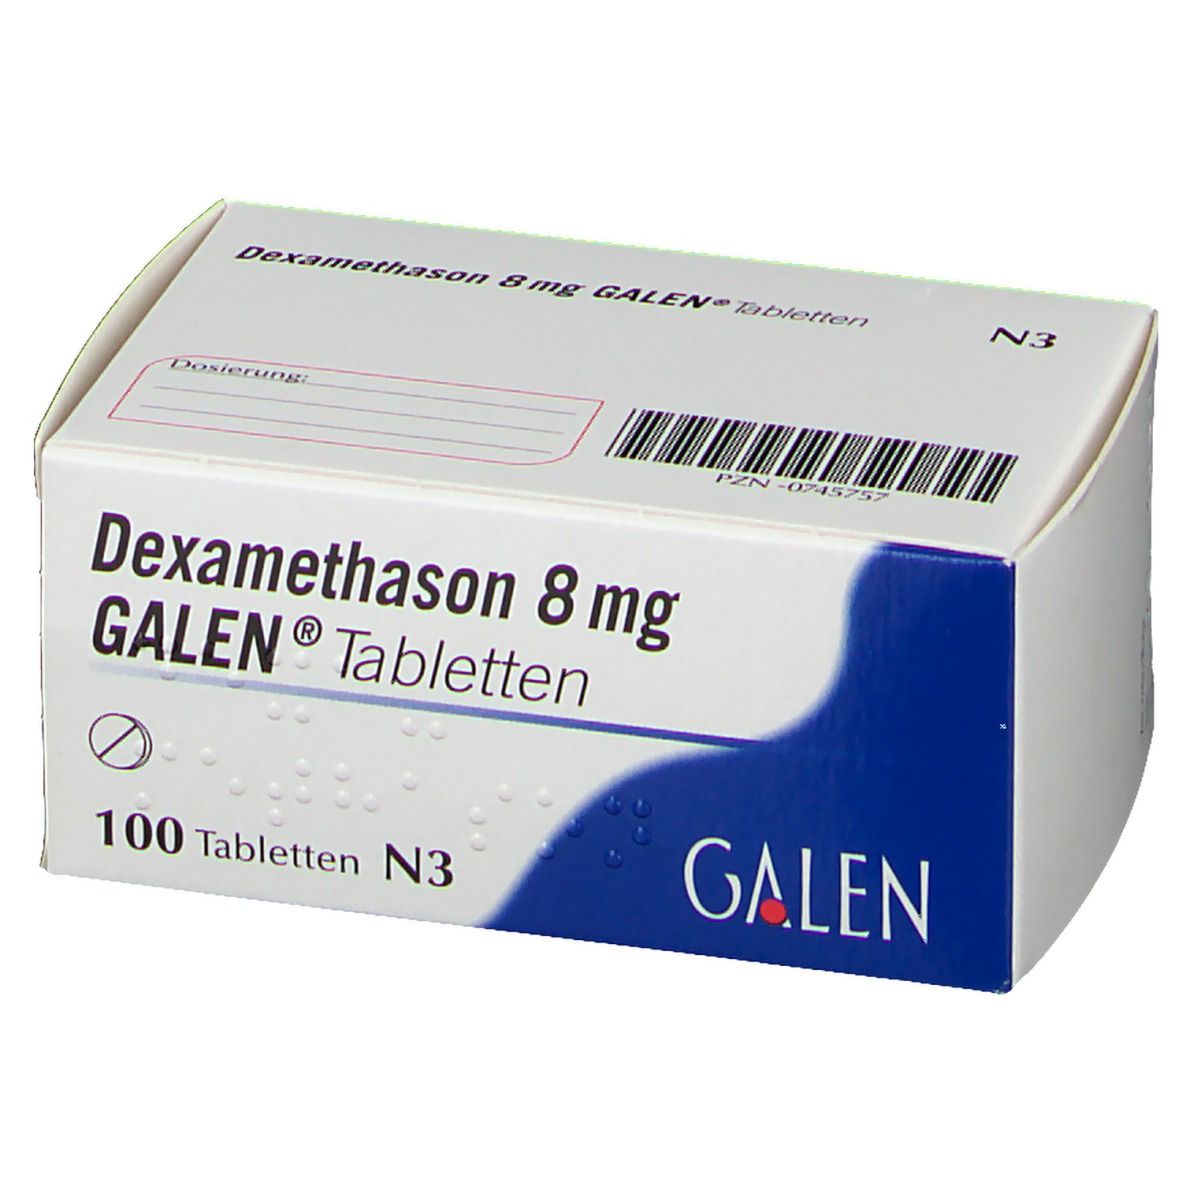 Dexamethason 8 mg GALEN®